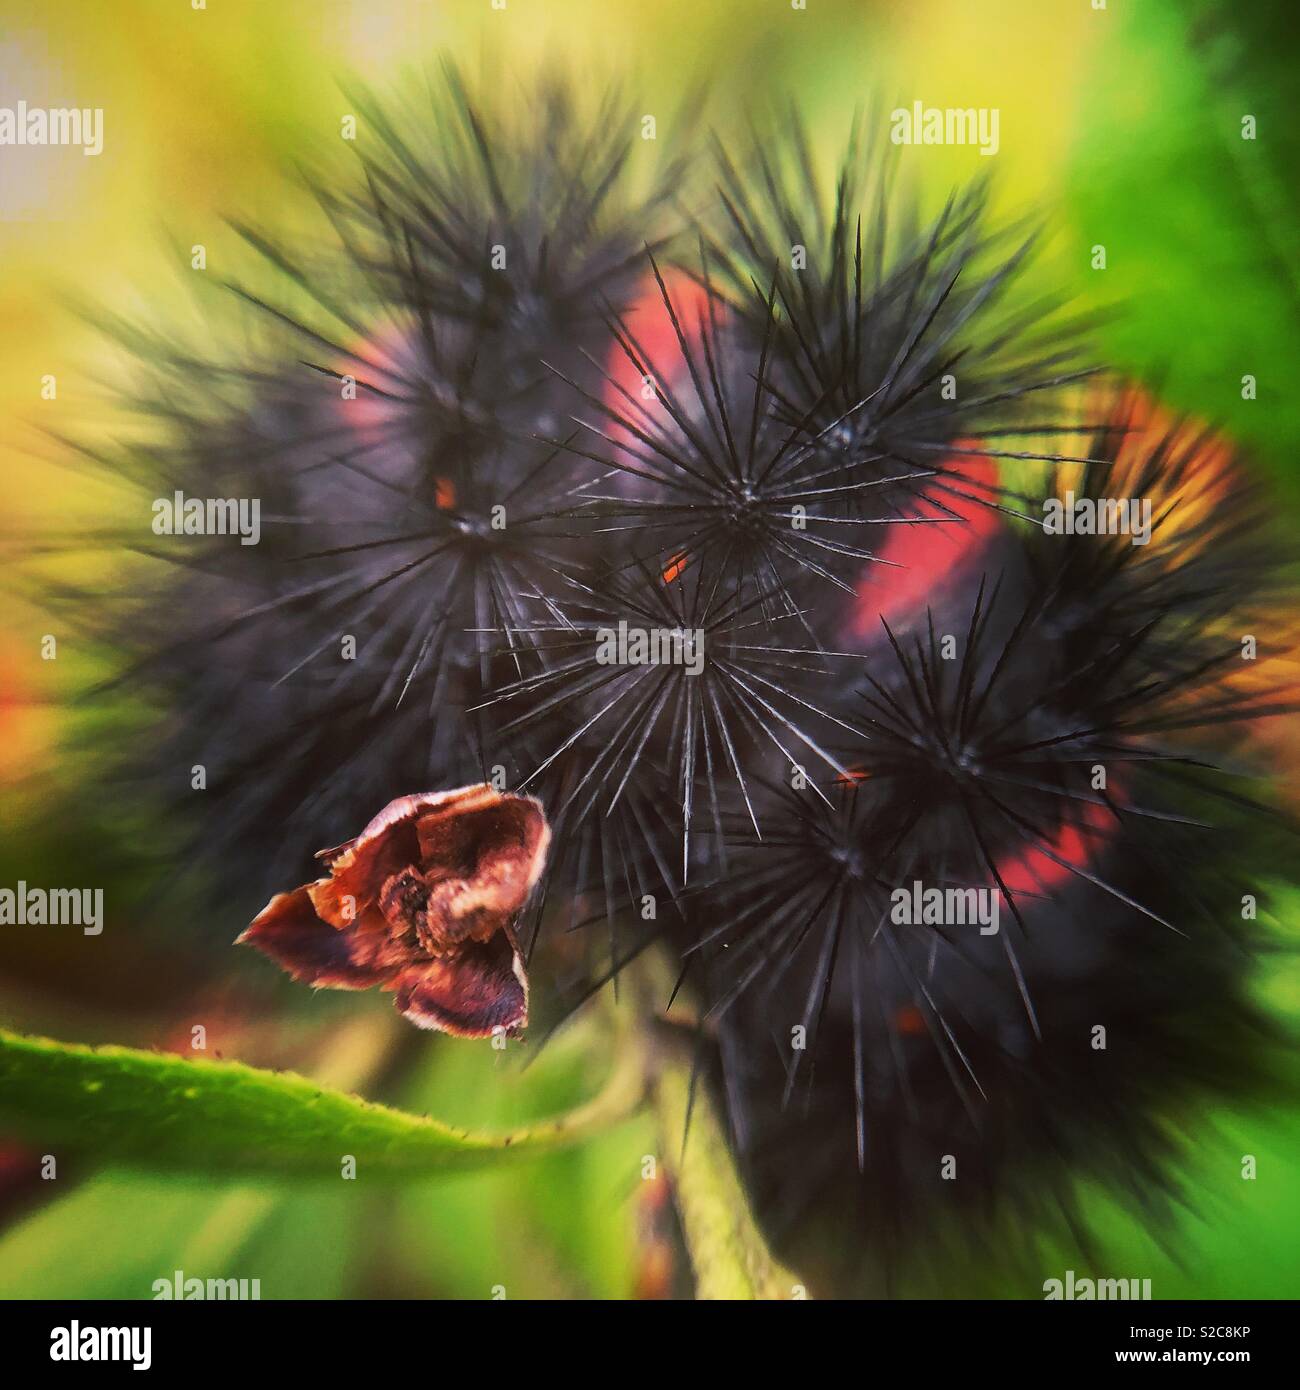 Munching Caterpillar Mascot Stock Illustration by ©lenmdp #58949045